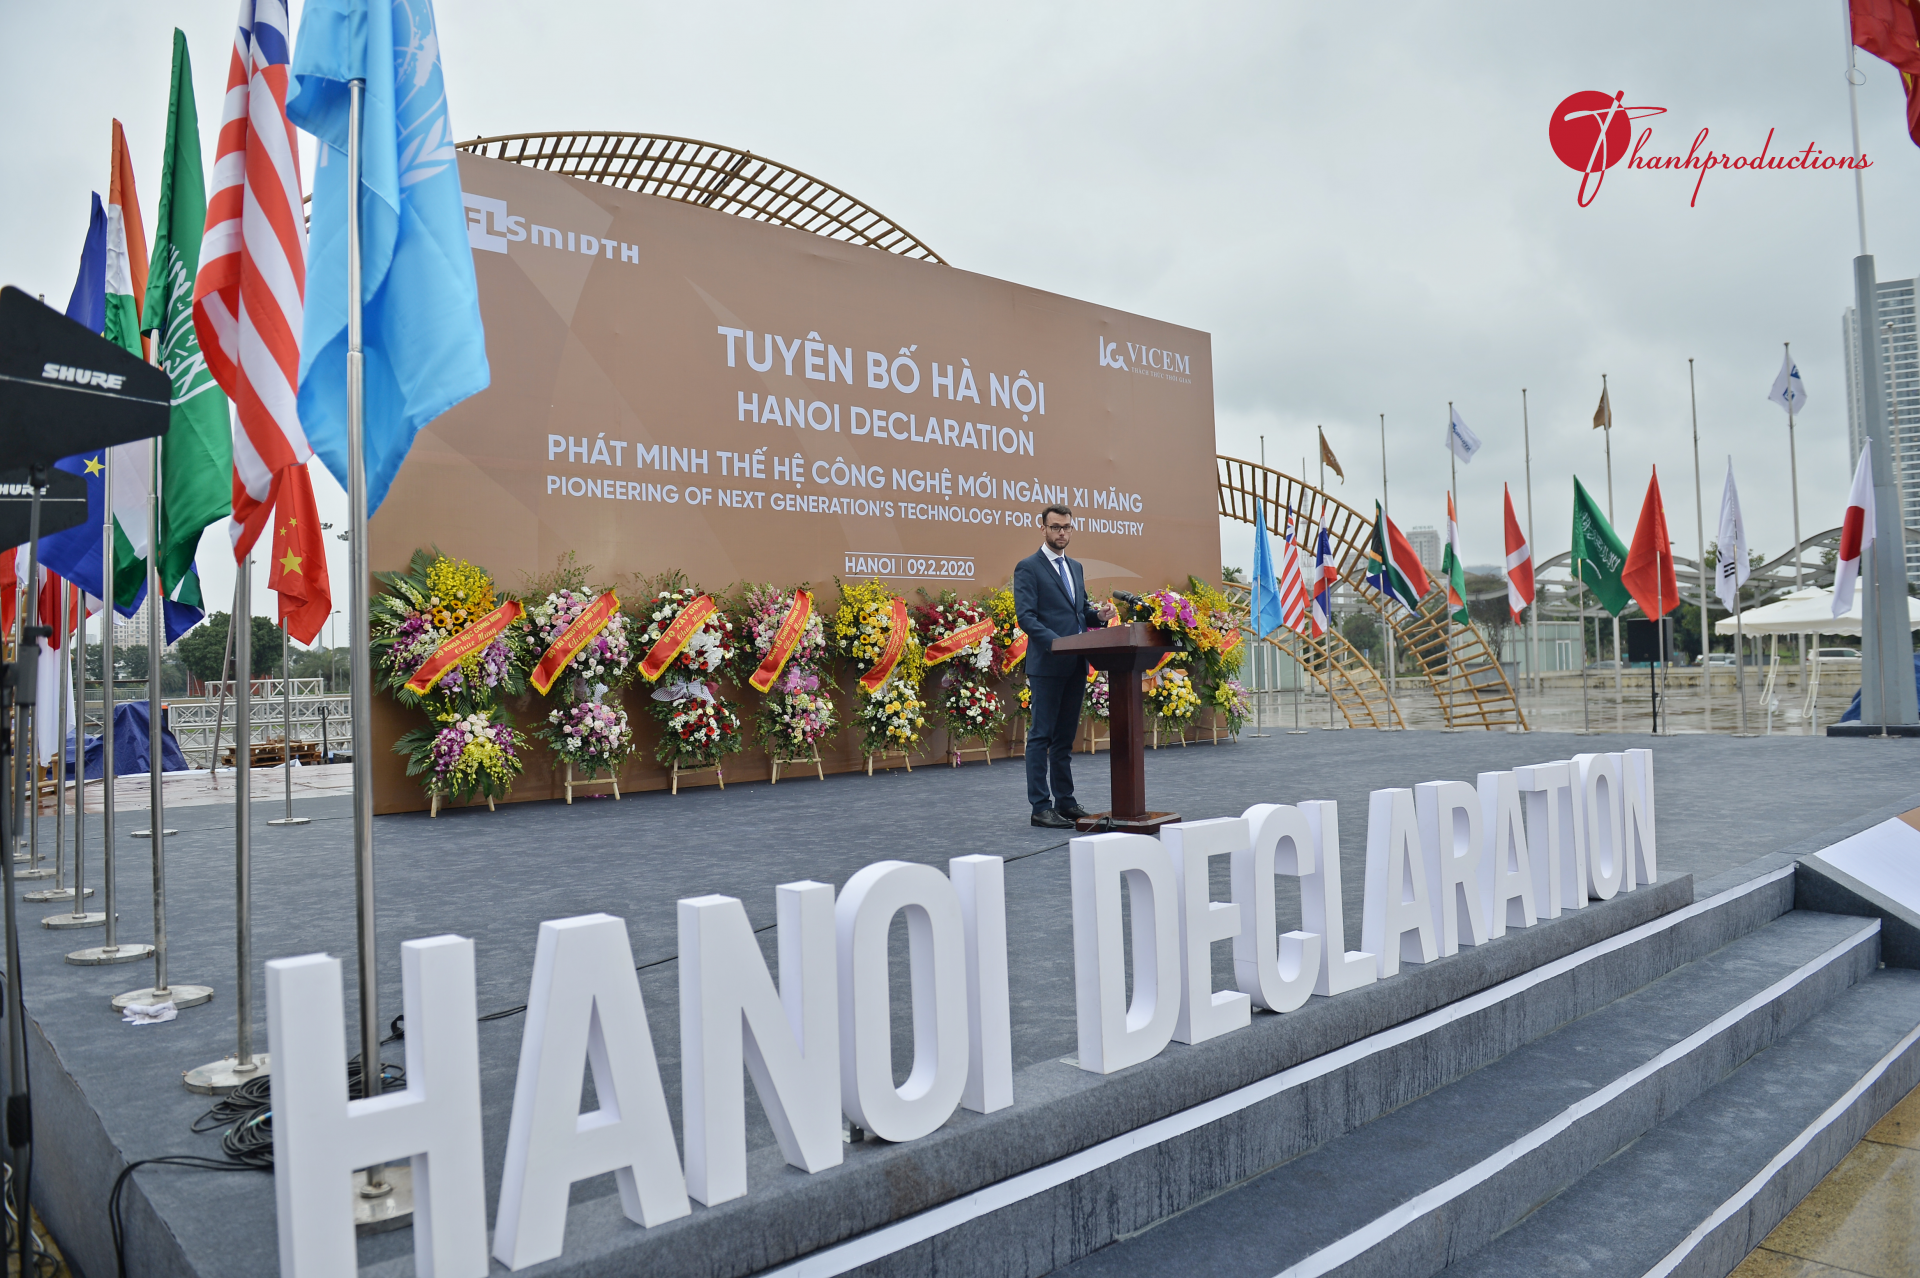 HANOI DECLARATION 2020